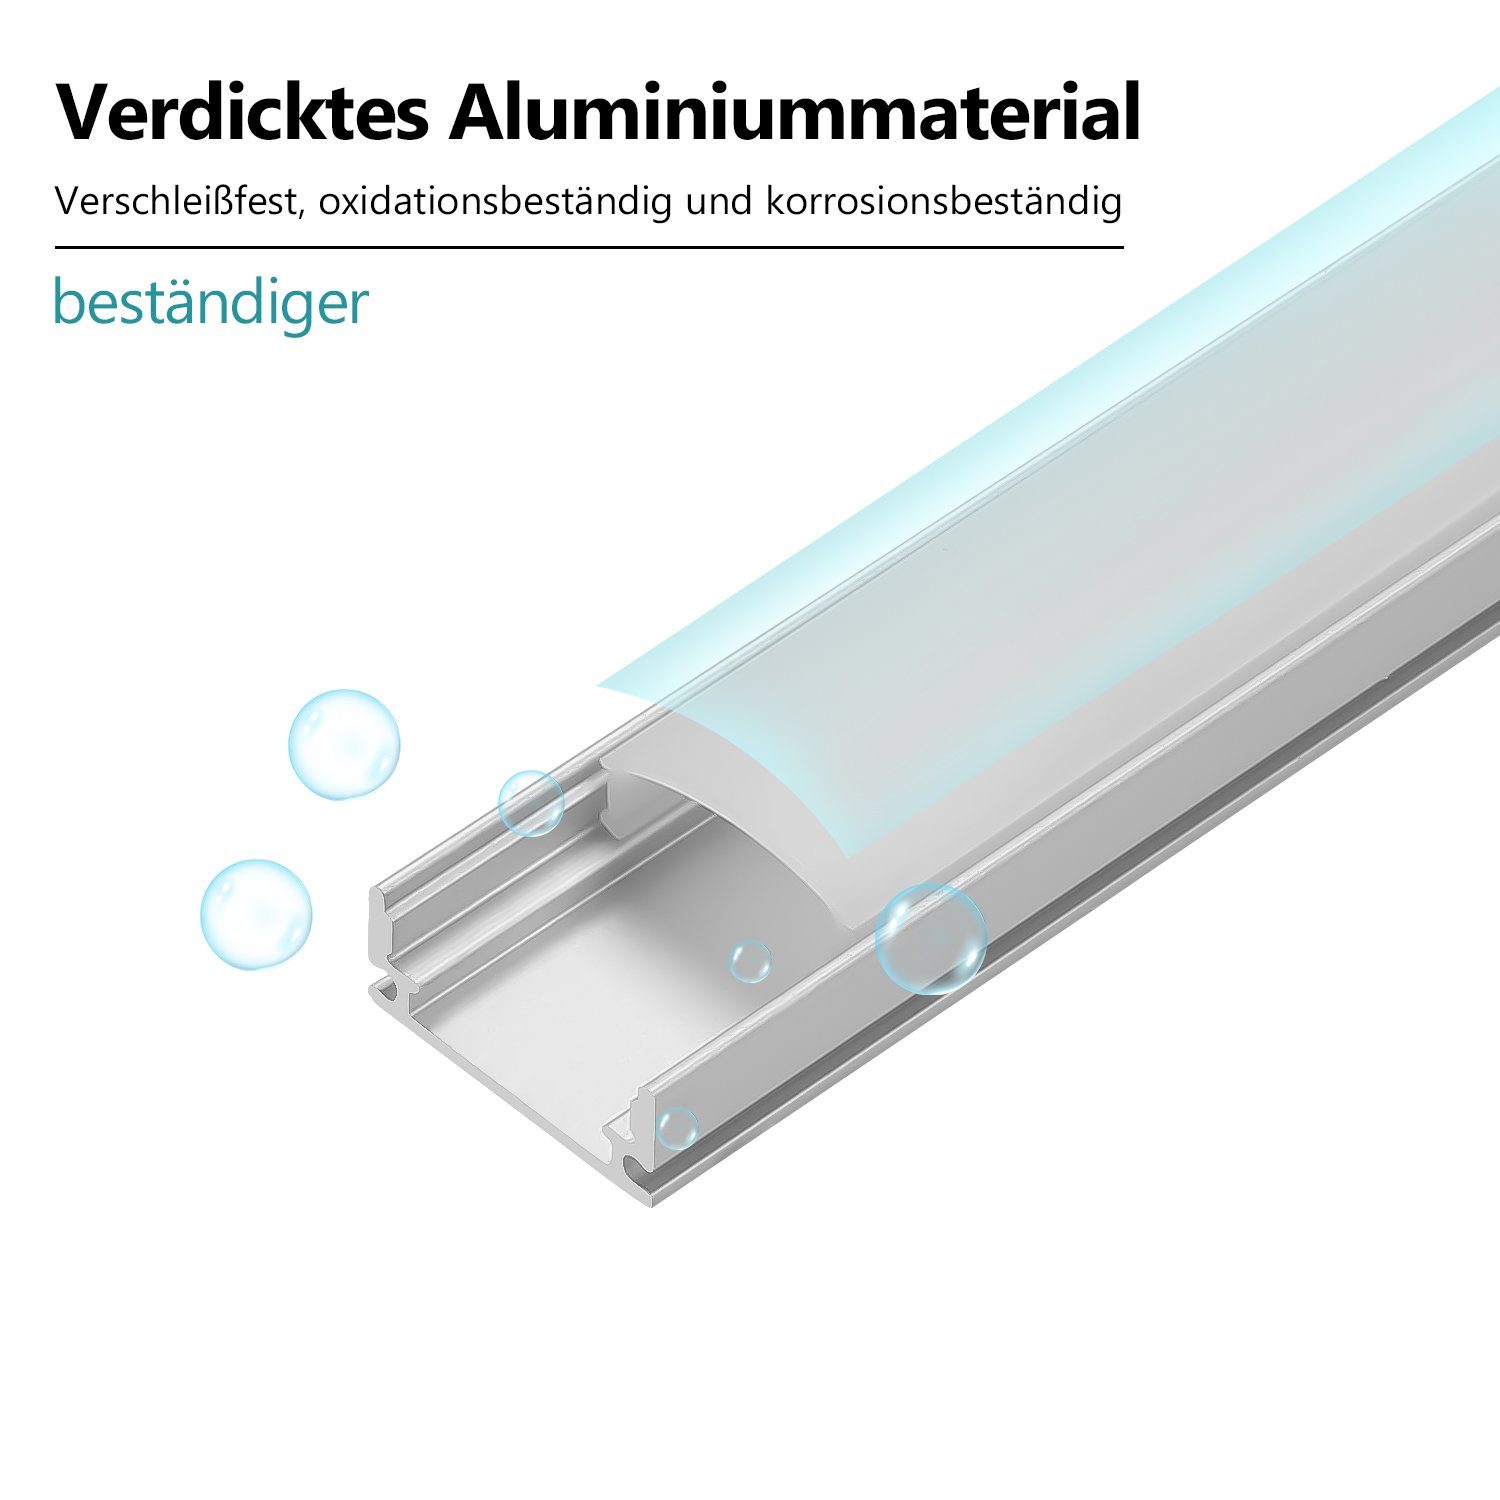 Clanmacy LED-Stripe-Profil 10x 1m LED Profil Schiene Aluminium Leiste